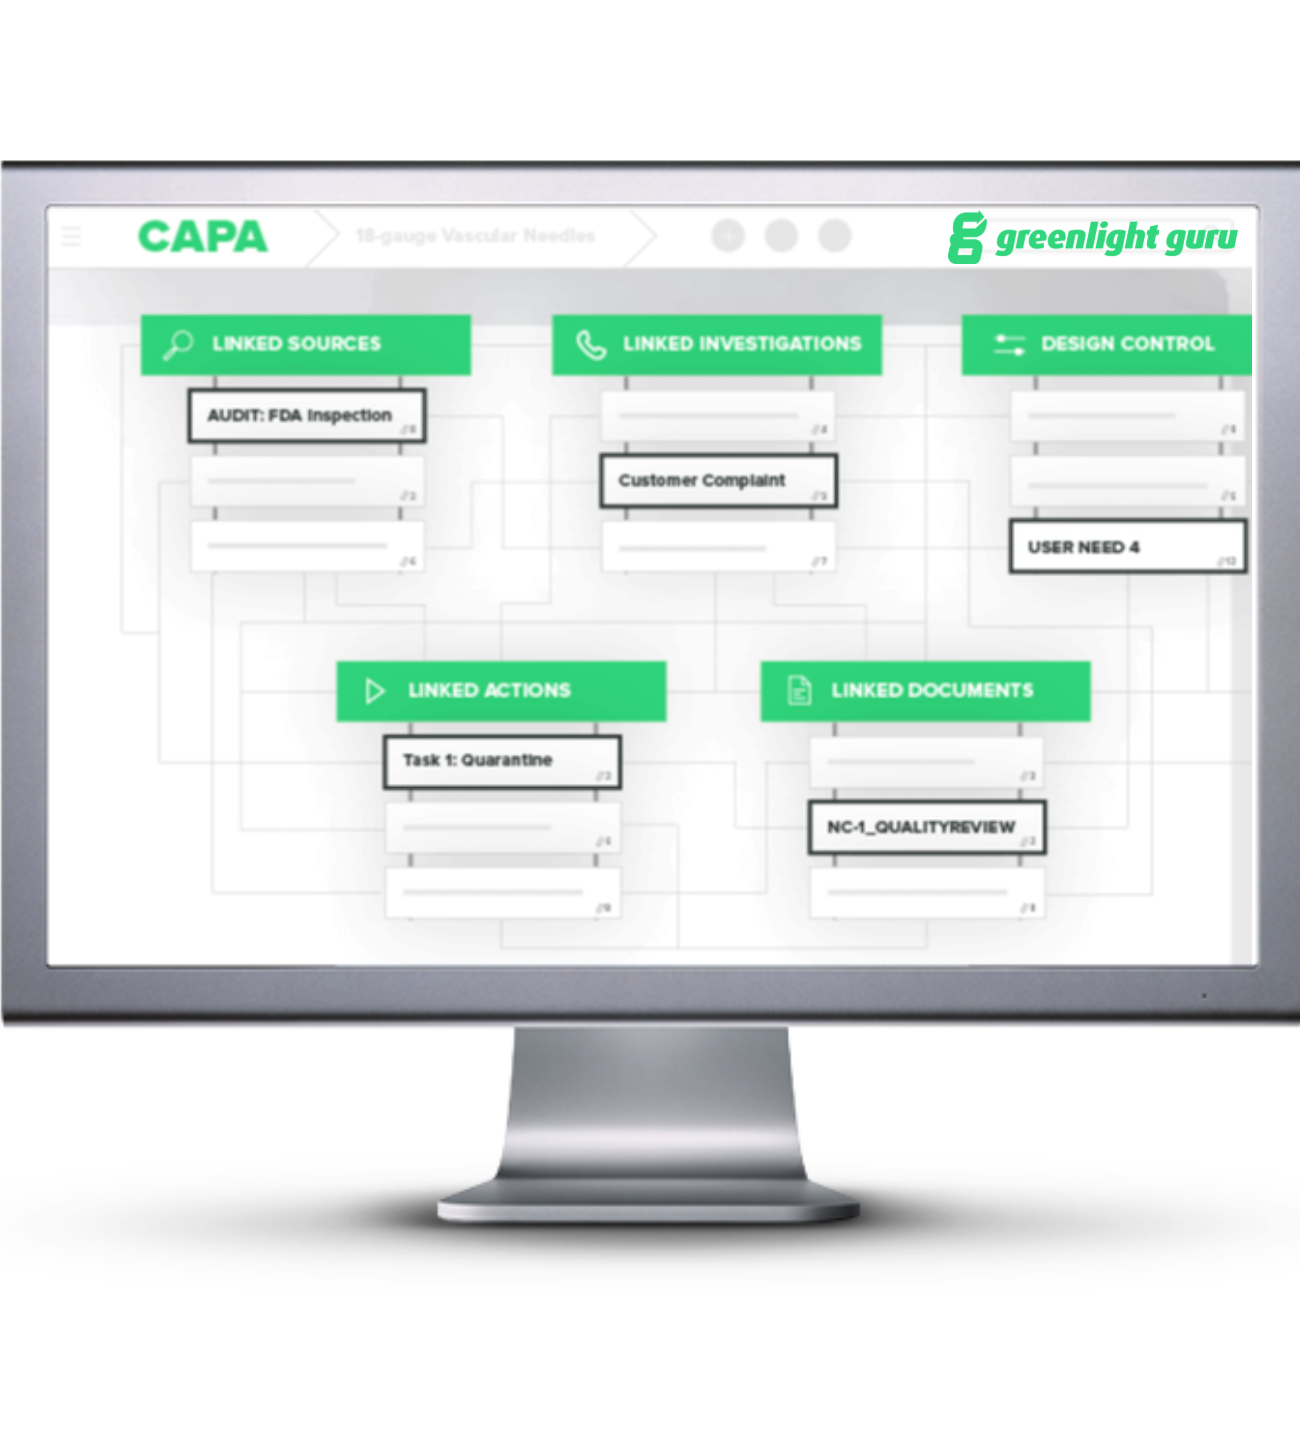 CAPA software on screen - slide-in